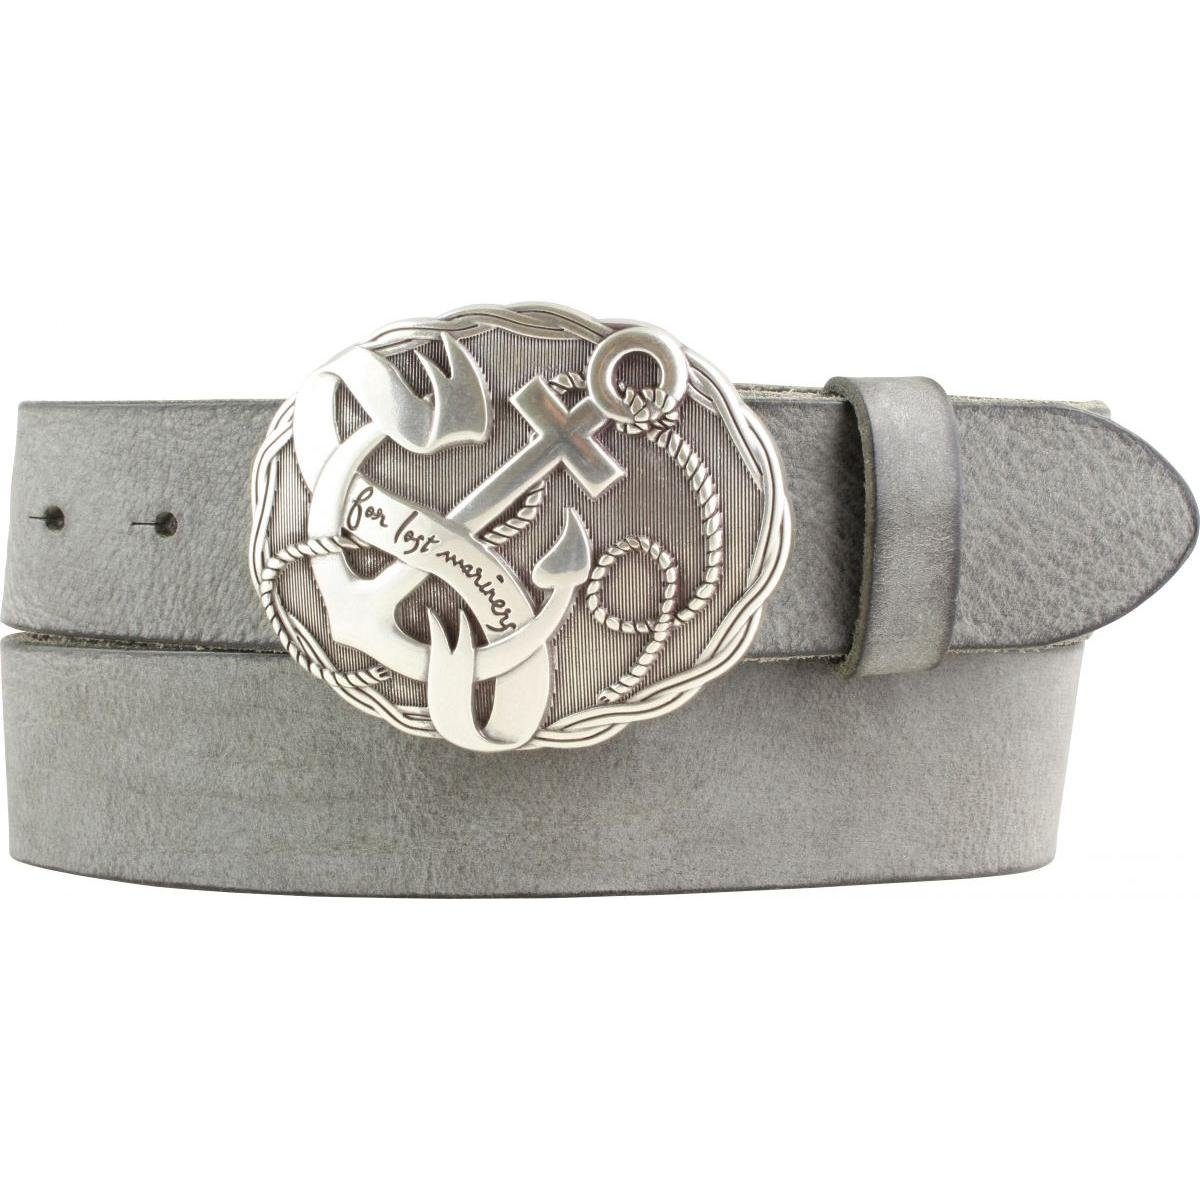 cm 4 mit BELTINGER Dunkelgrau, Used-Lo Anker-Gürtelschnalle Vollrindleder weichem Gürtel Silber Ledergürtel aus